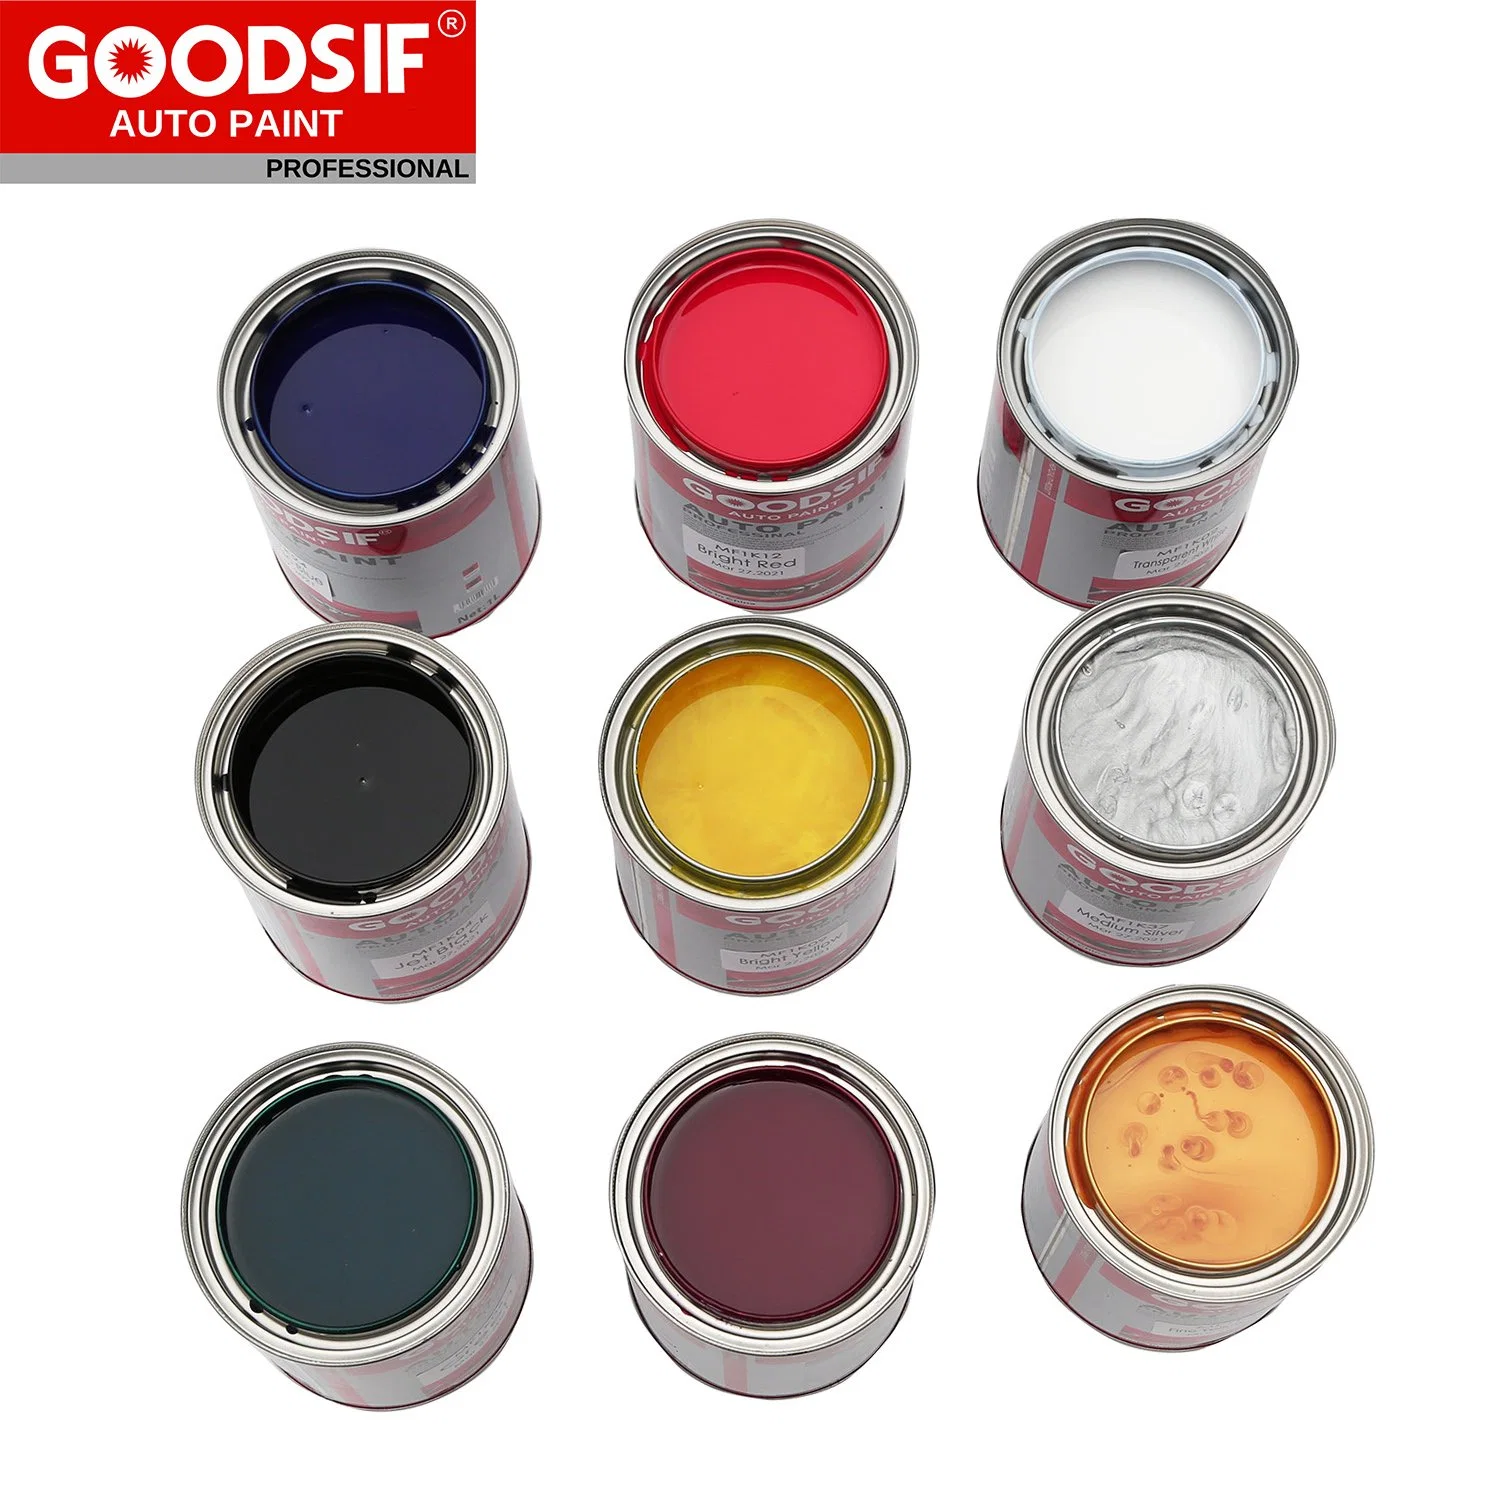 Goodsif Car Paint Manufacturer Excellent Chemical Resistance 2K Varnish Acrylic Auto Clearcoat for Automotive Refinish Paint